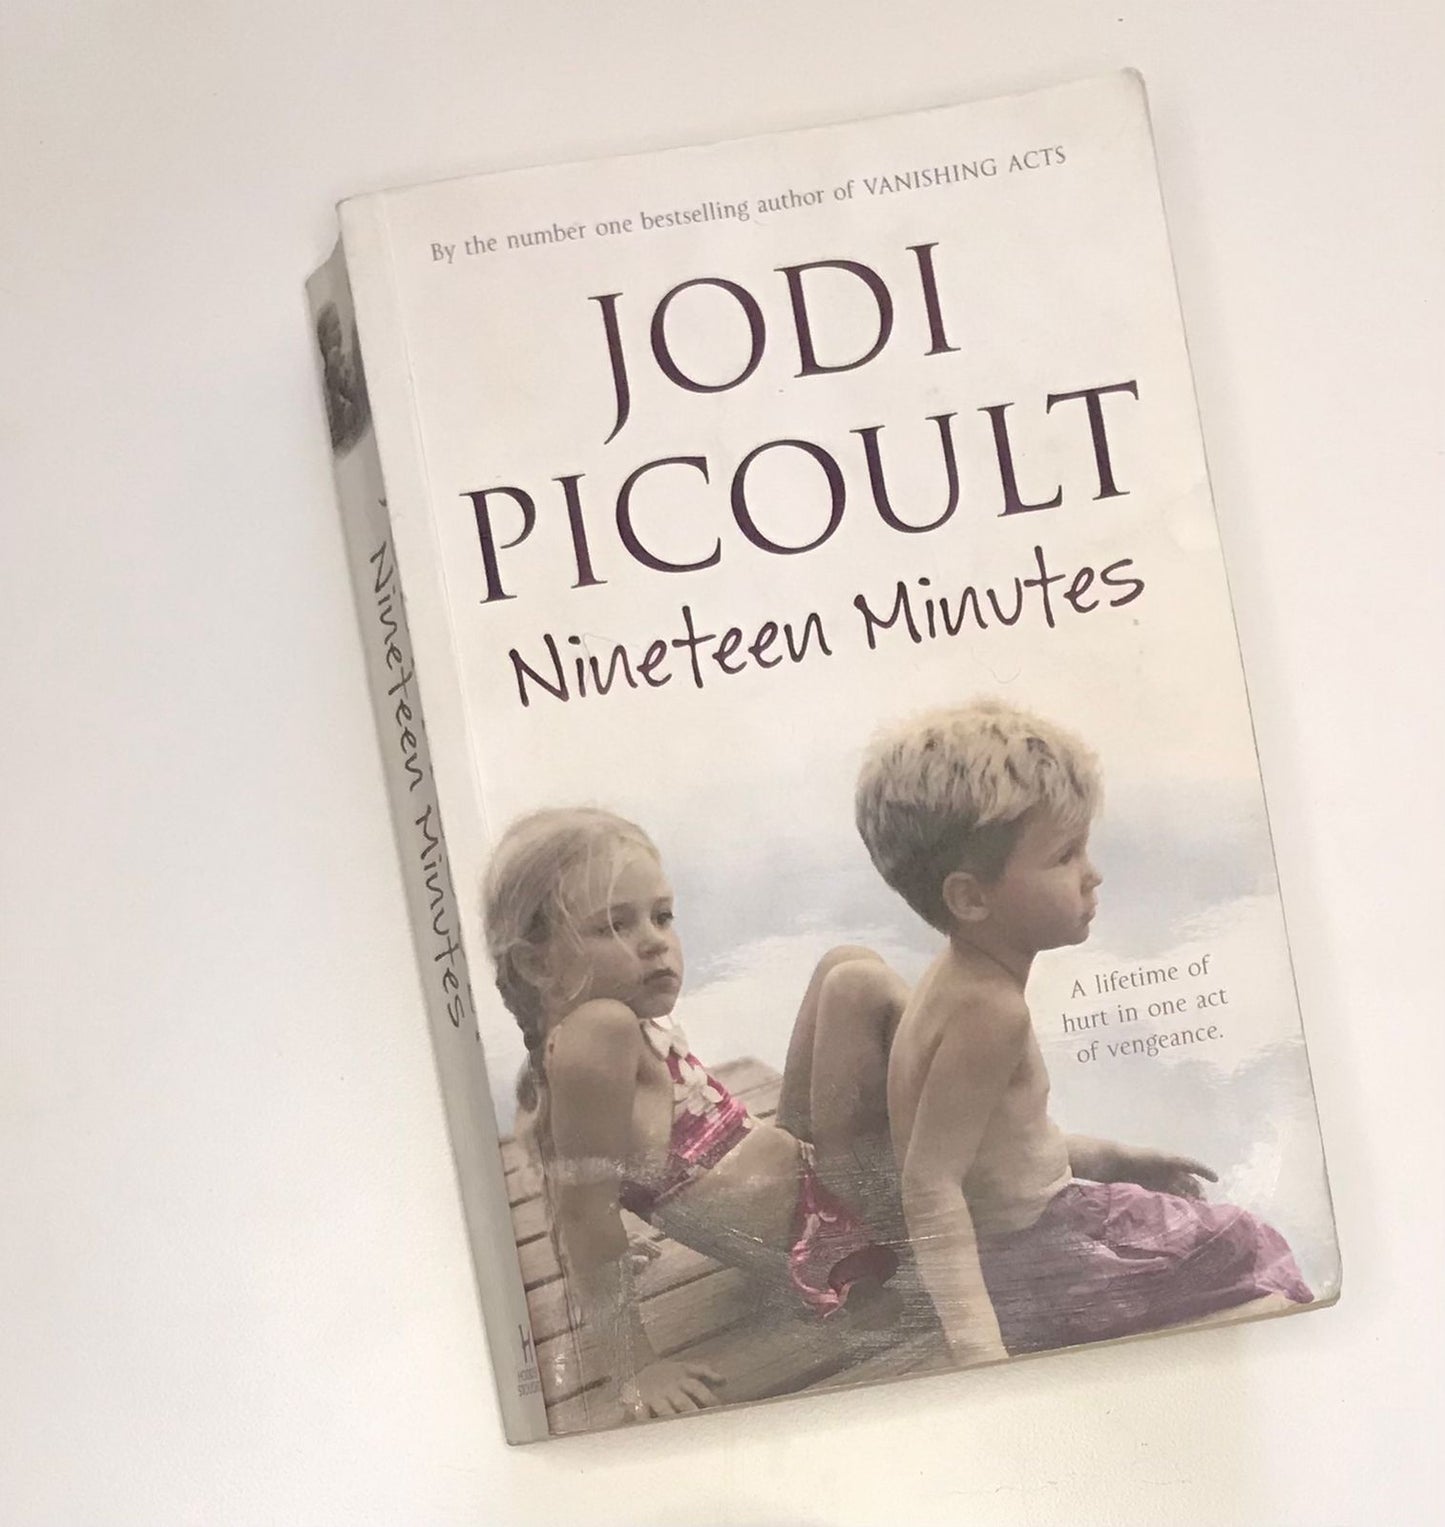 Nineteen minutes - Jodi Picoult